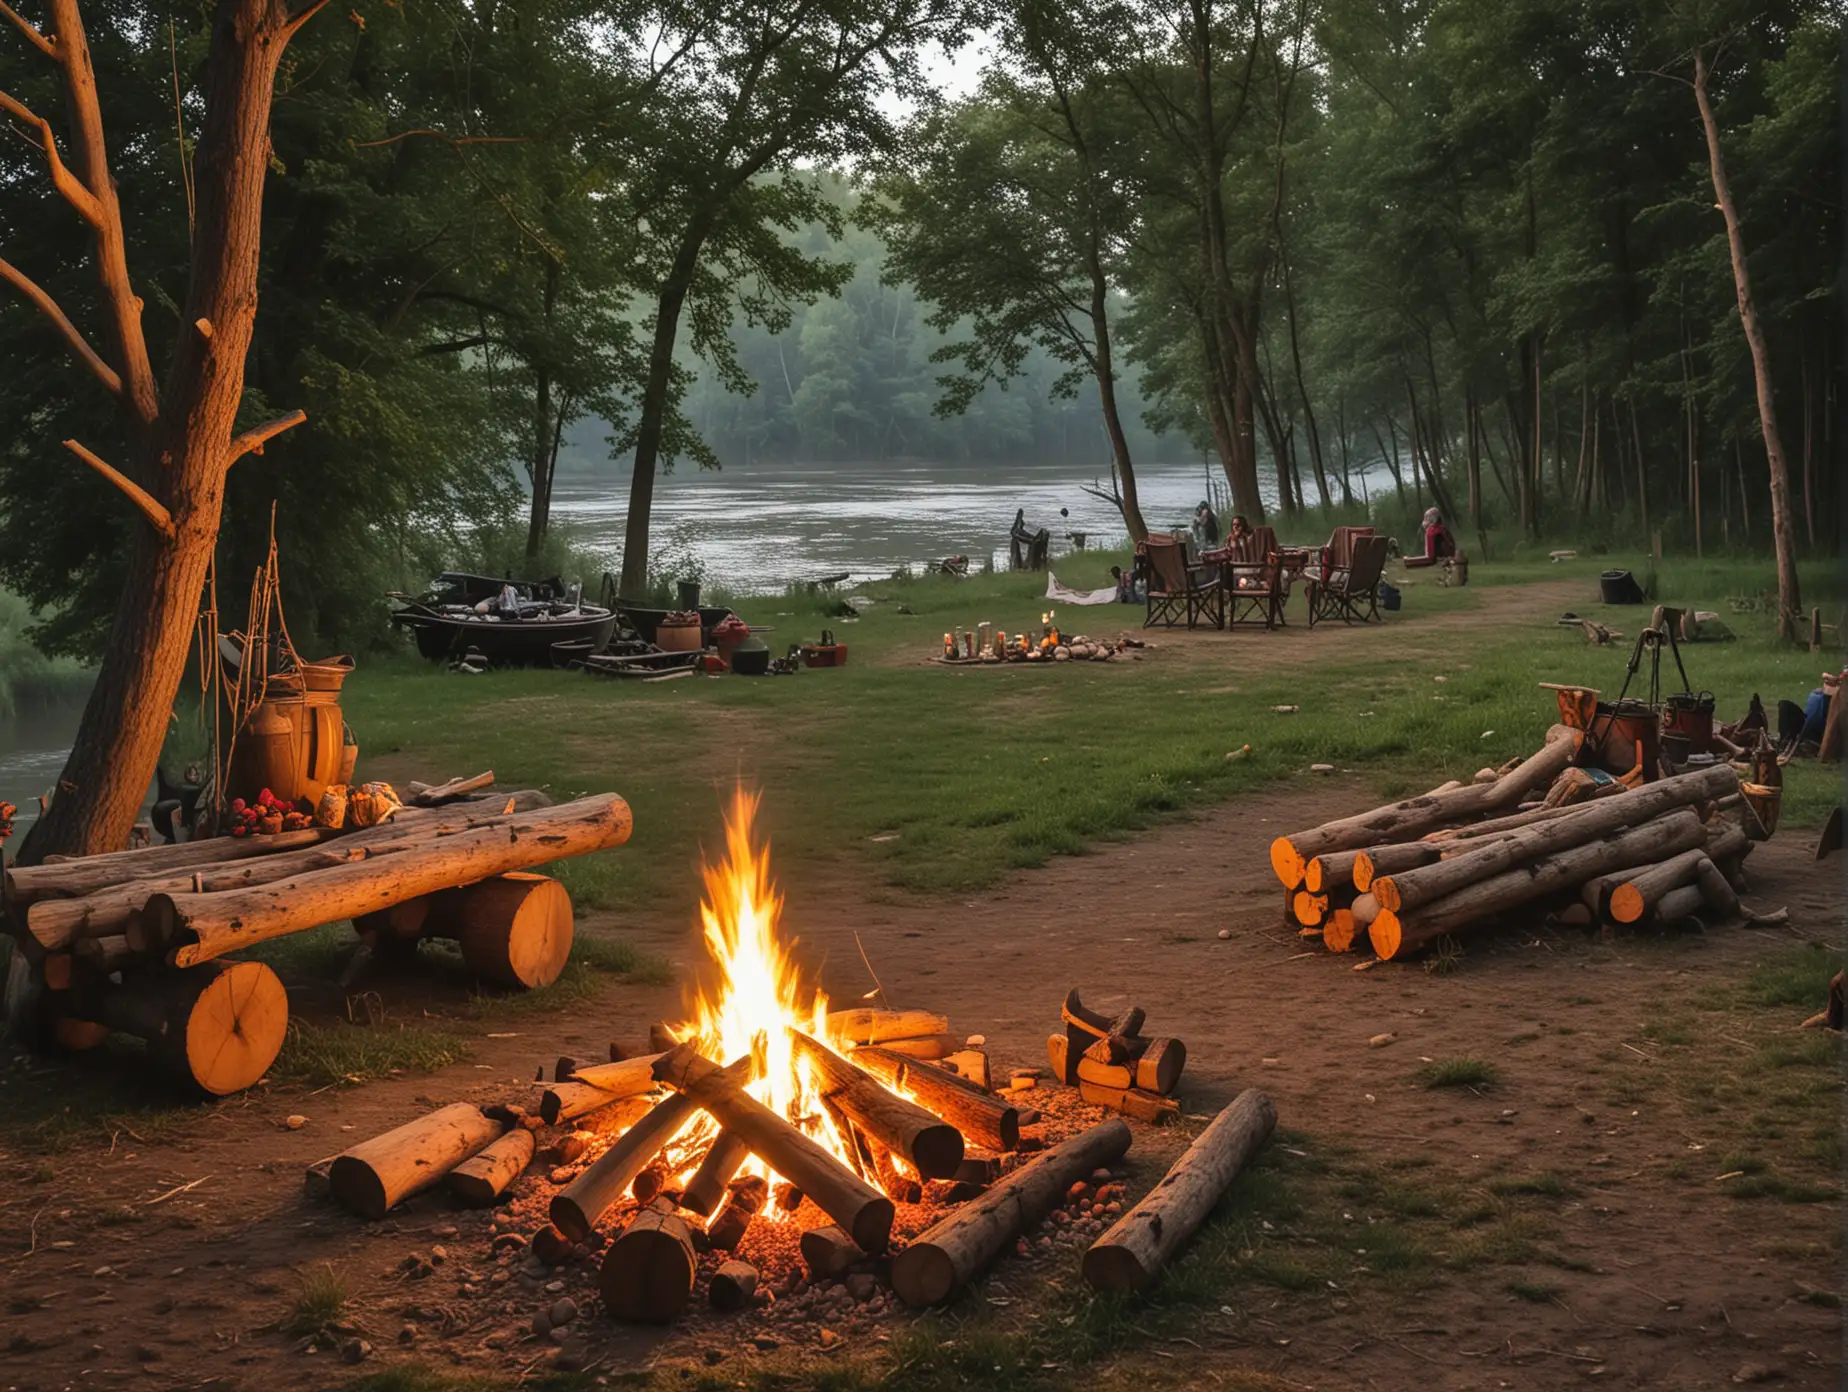 Gypsy Themed Riverside Campfire Gathering at Dusk in Summer